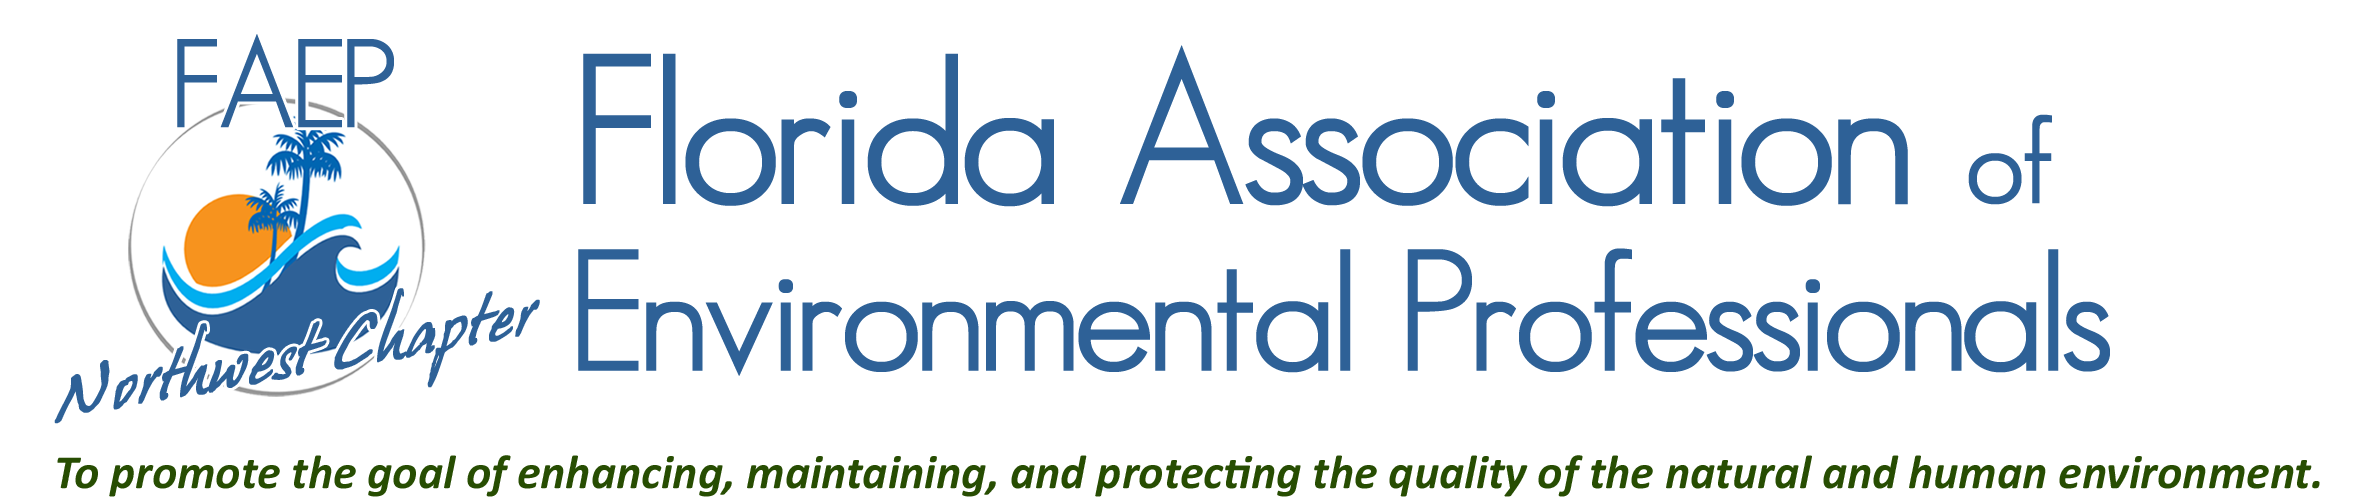 Florida Association of Environmental Professionals – Northwest Chapter Logo